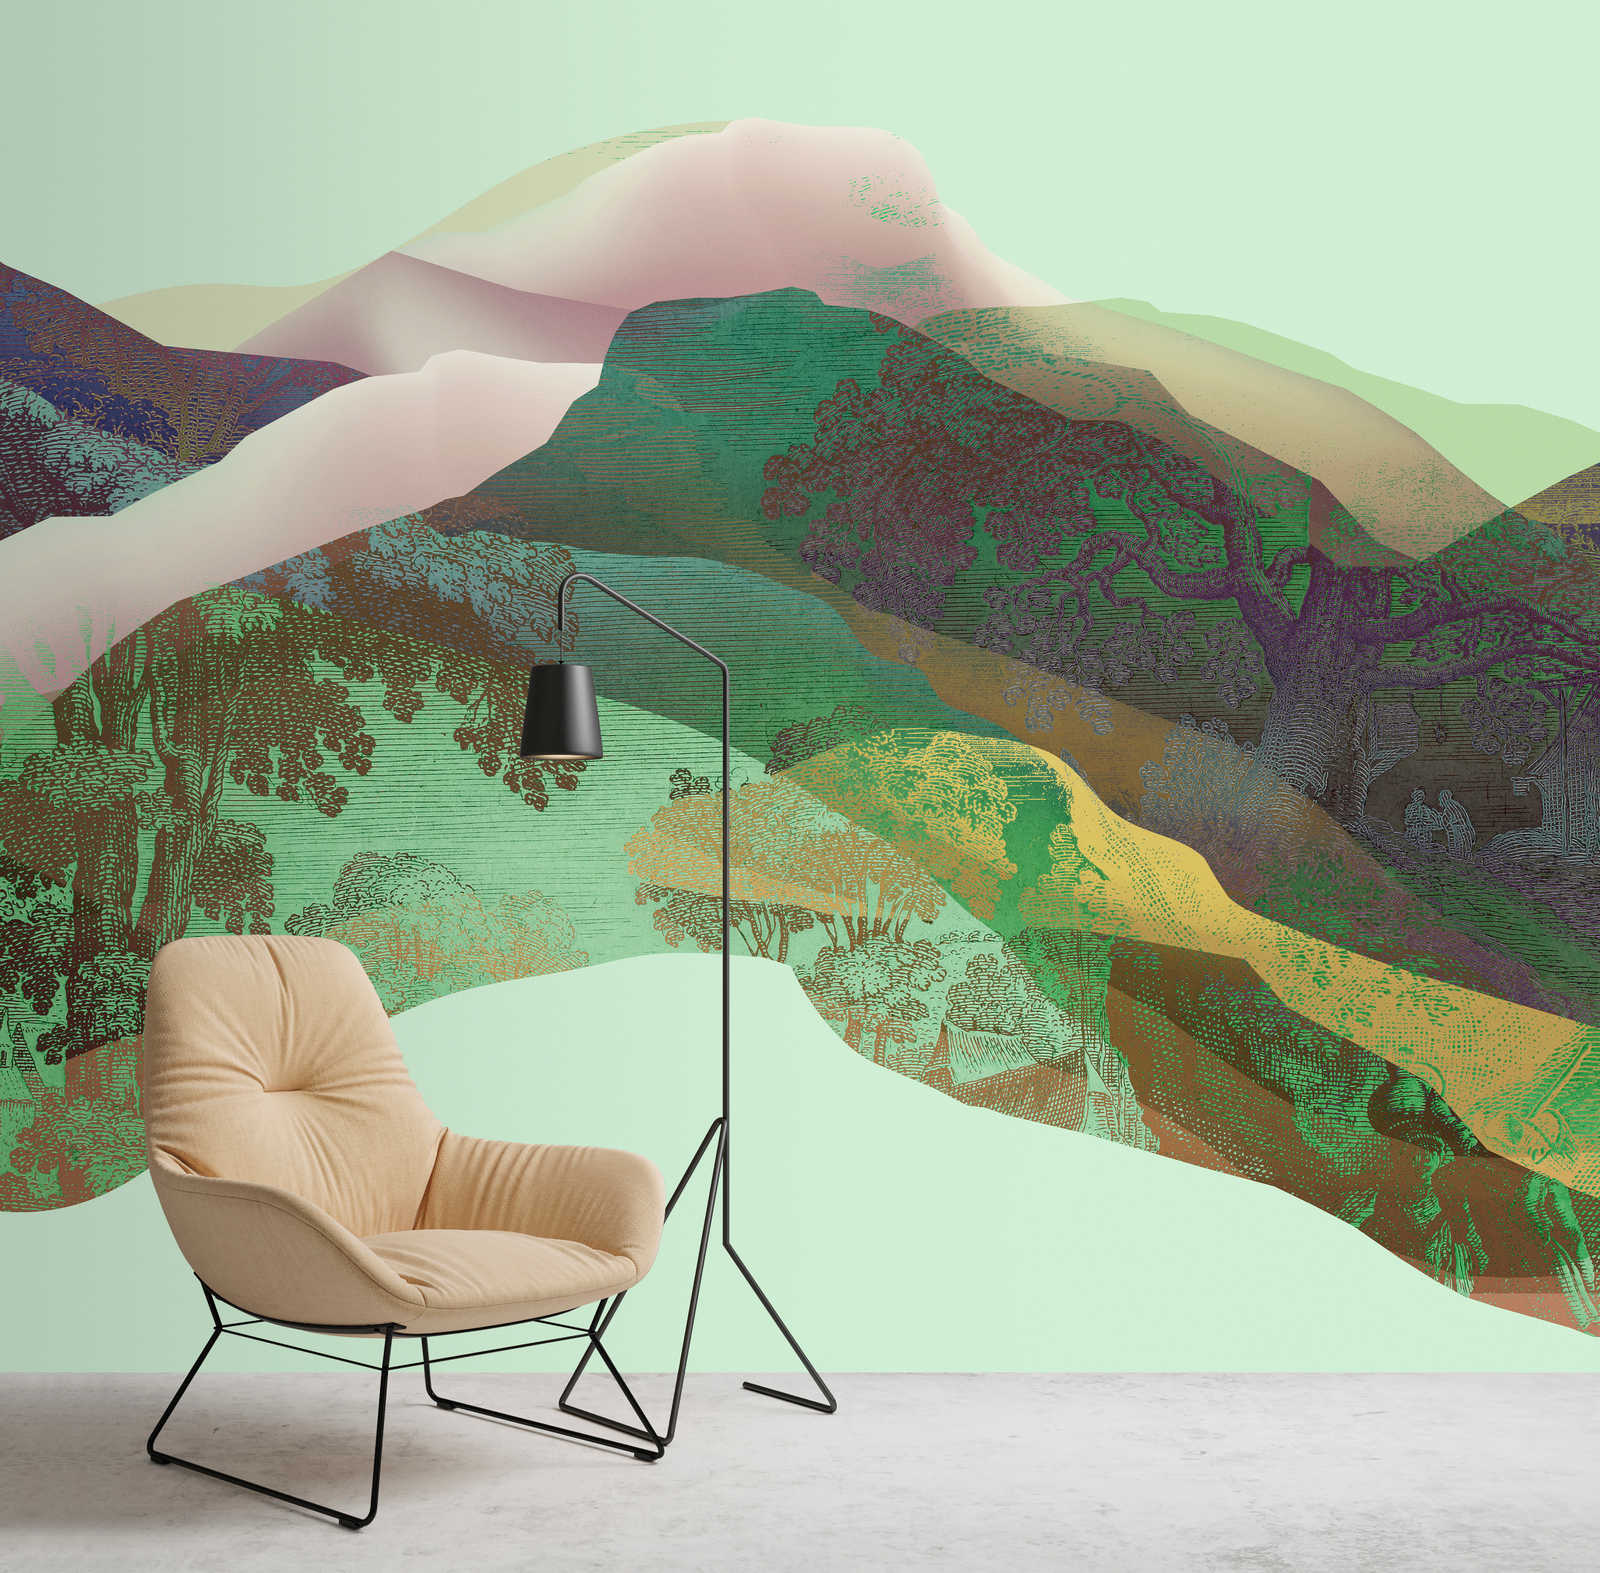             Magic Mountain 3 - mural green mountains modern design
        